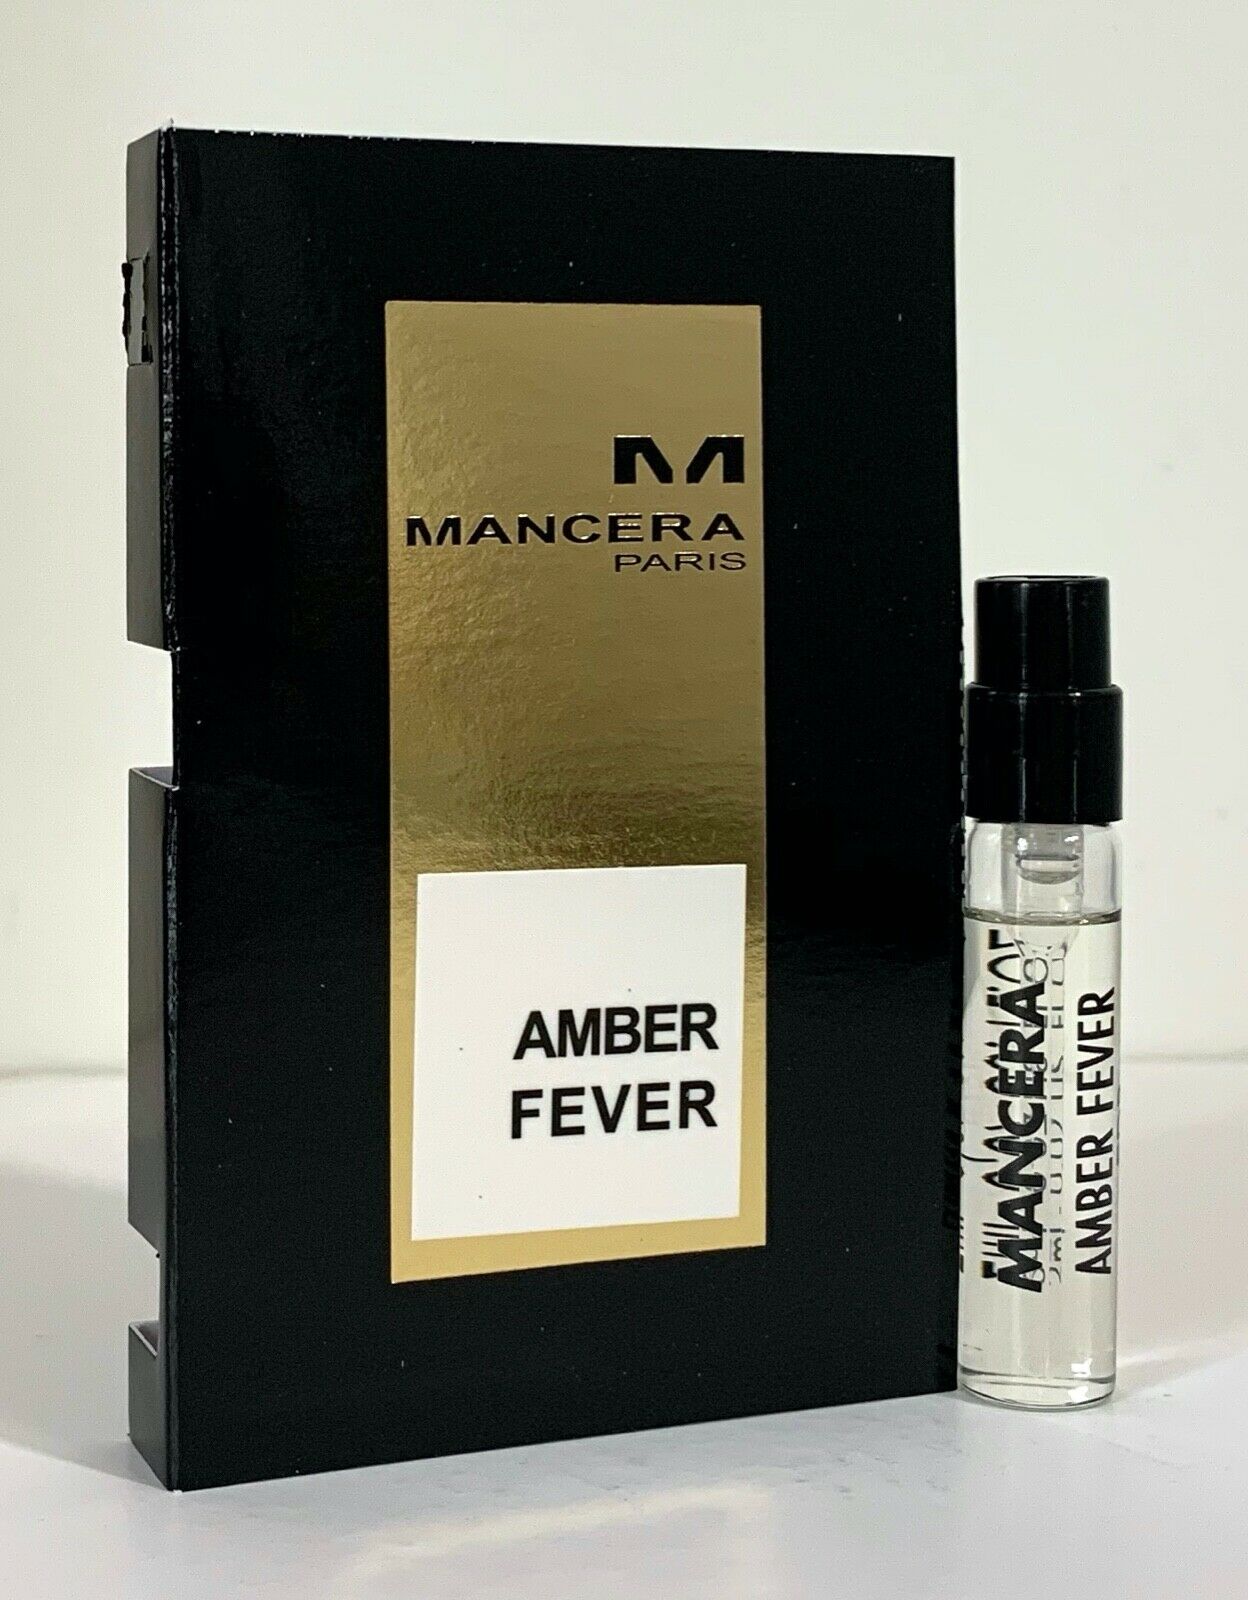 mancera Amber Fever resmi koku örneği 2ml 0.06 fl. oz., Mancera Amber Fever 2ml 0.06 fl. oz. resmi parfüm örneği